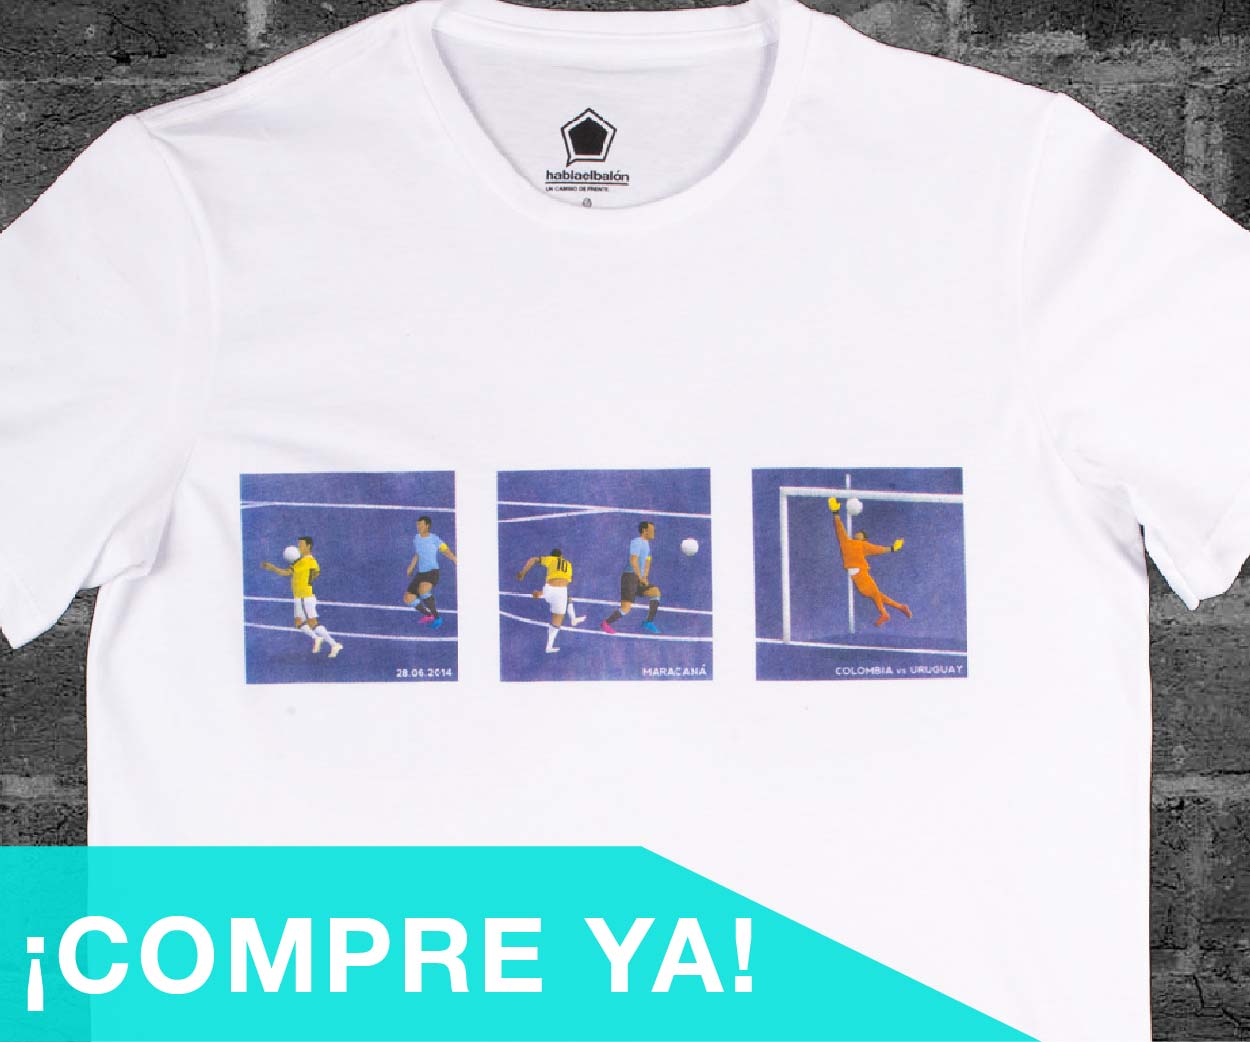 https://tienda.hablaelbalon.com/collections/frontpage/products/james-2014-camiseta-blanca